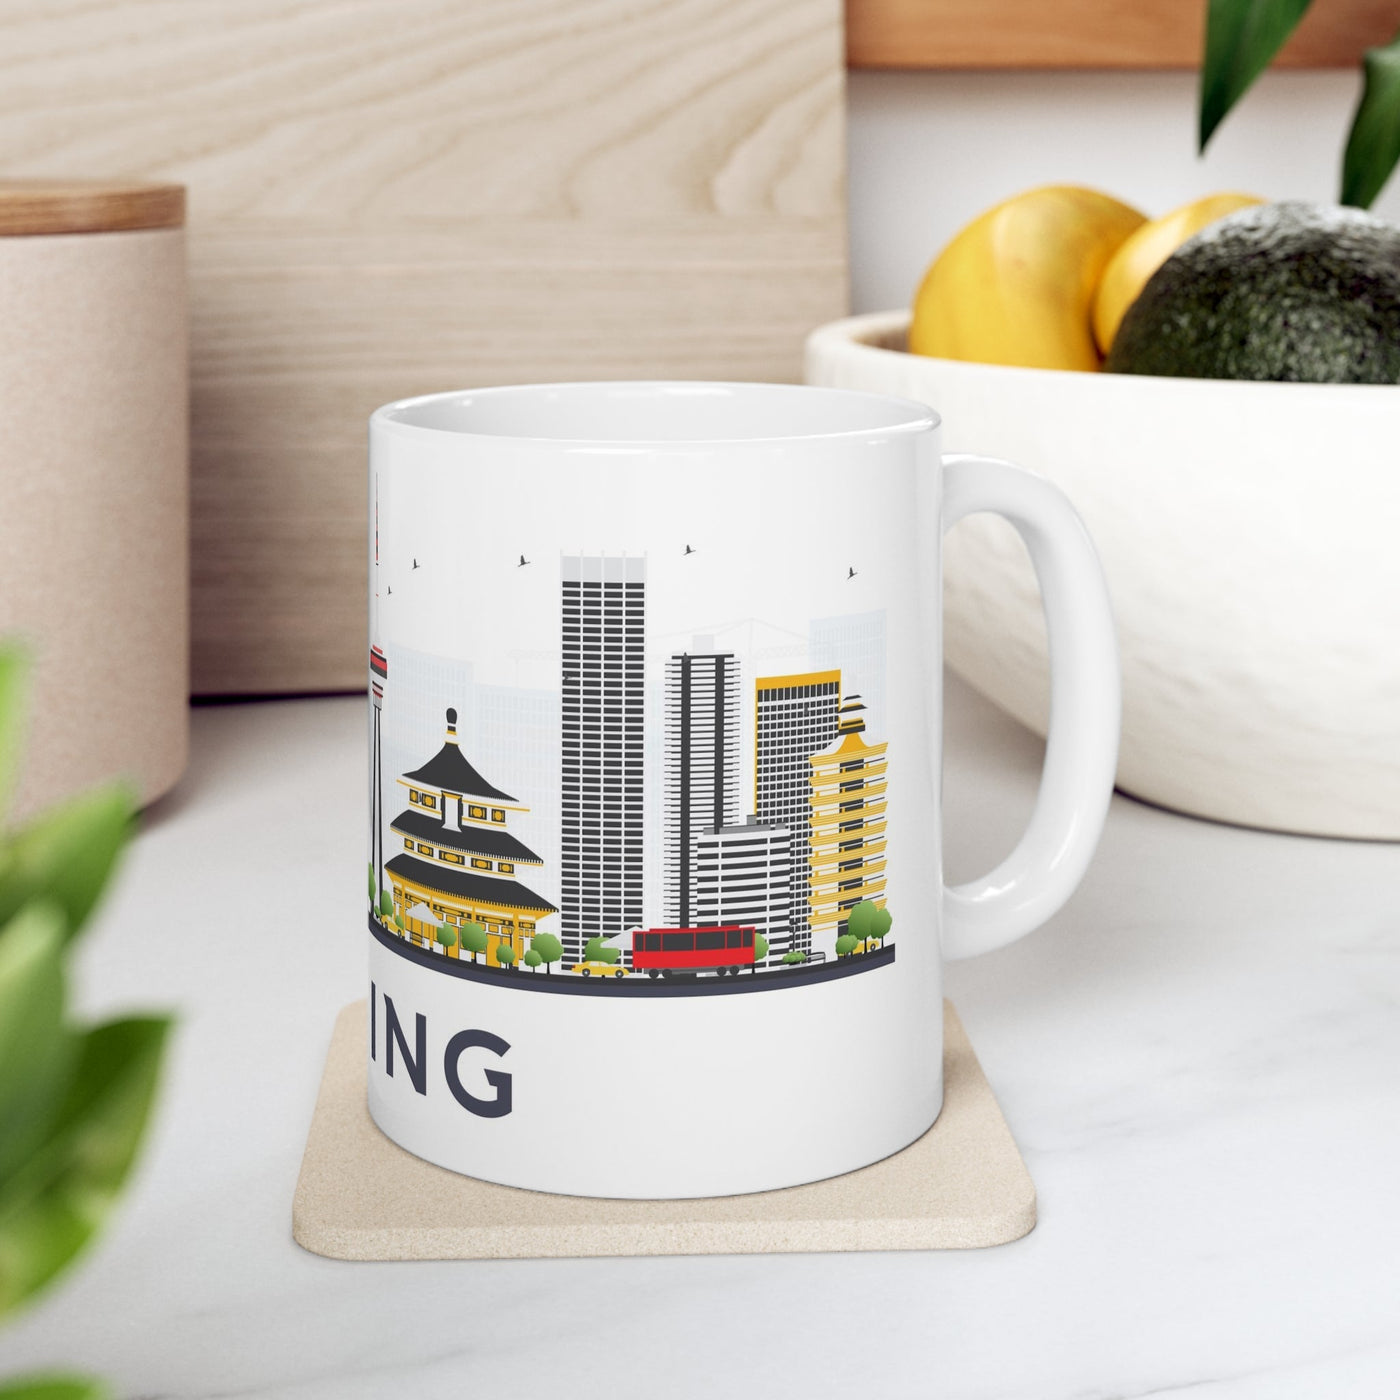 Beijing China Coffee Mug - Ezra's Clothing